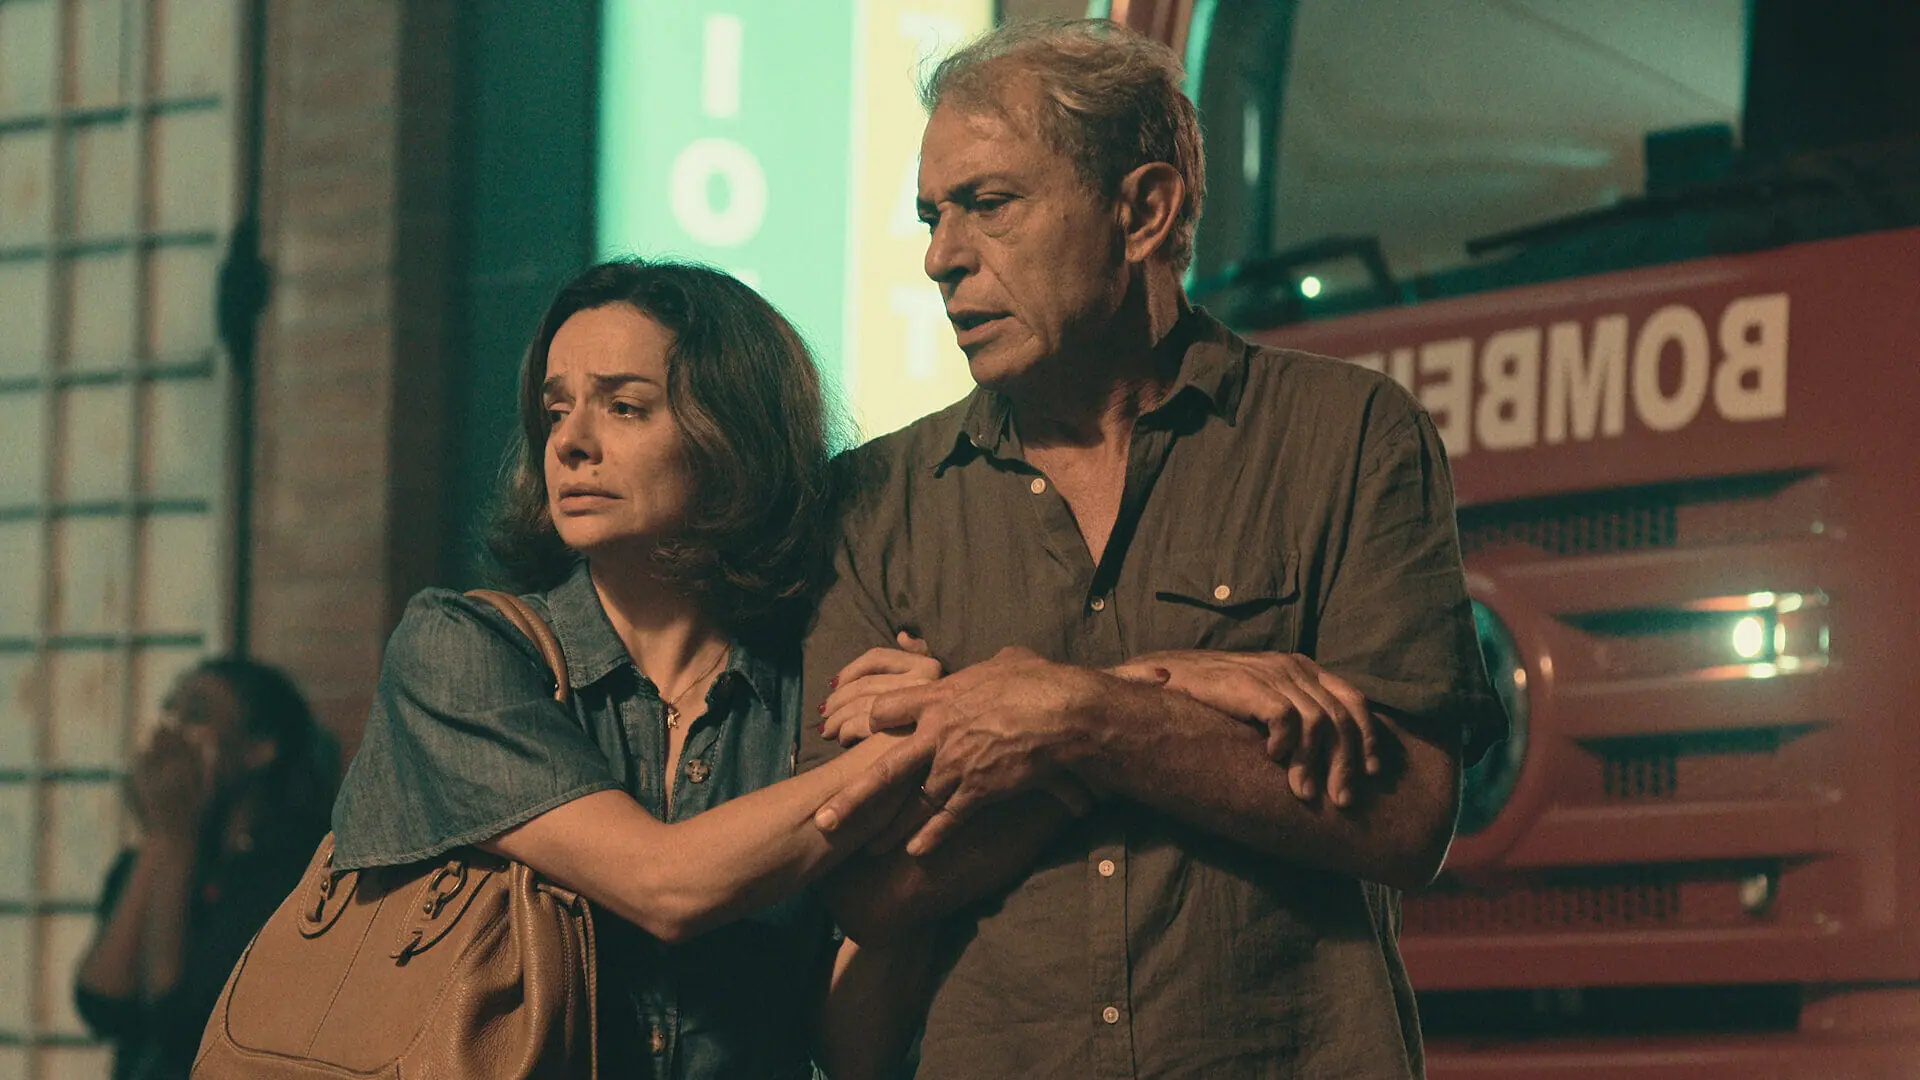 La serie se basa en la tragedia que sucedió en Brasil en 2013. (Netflix)